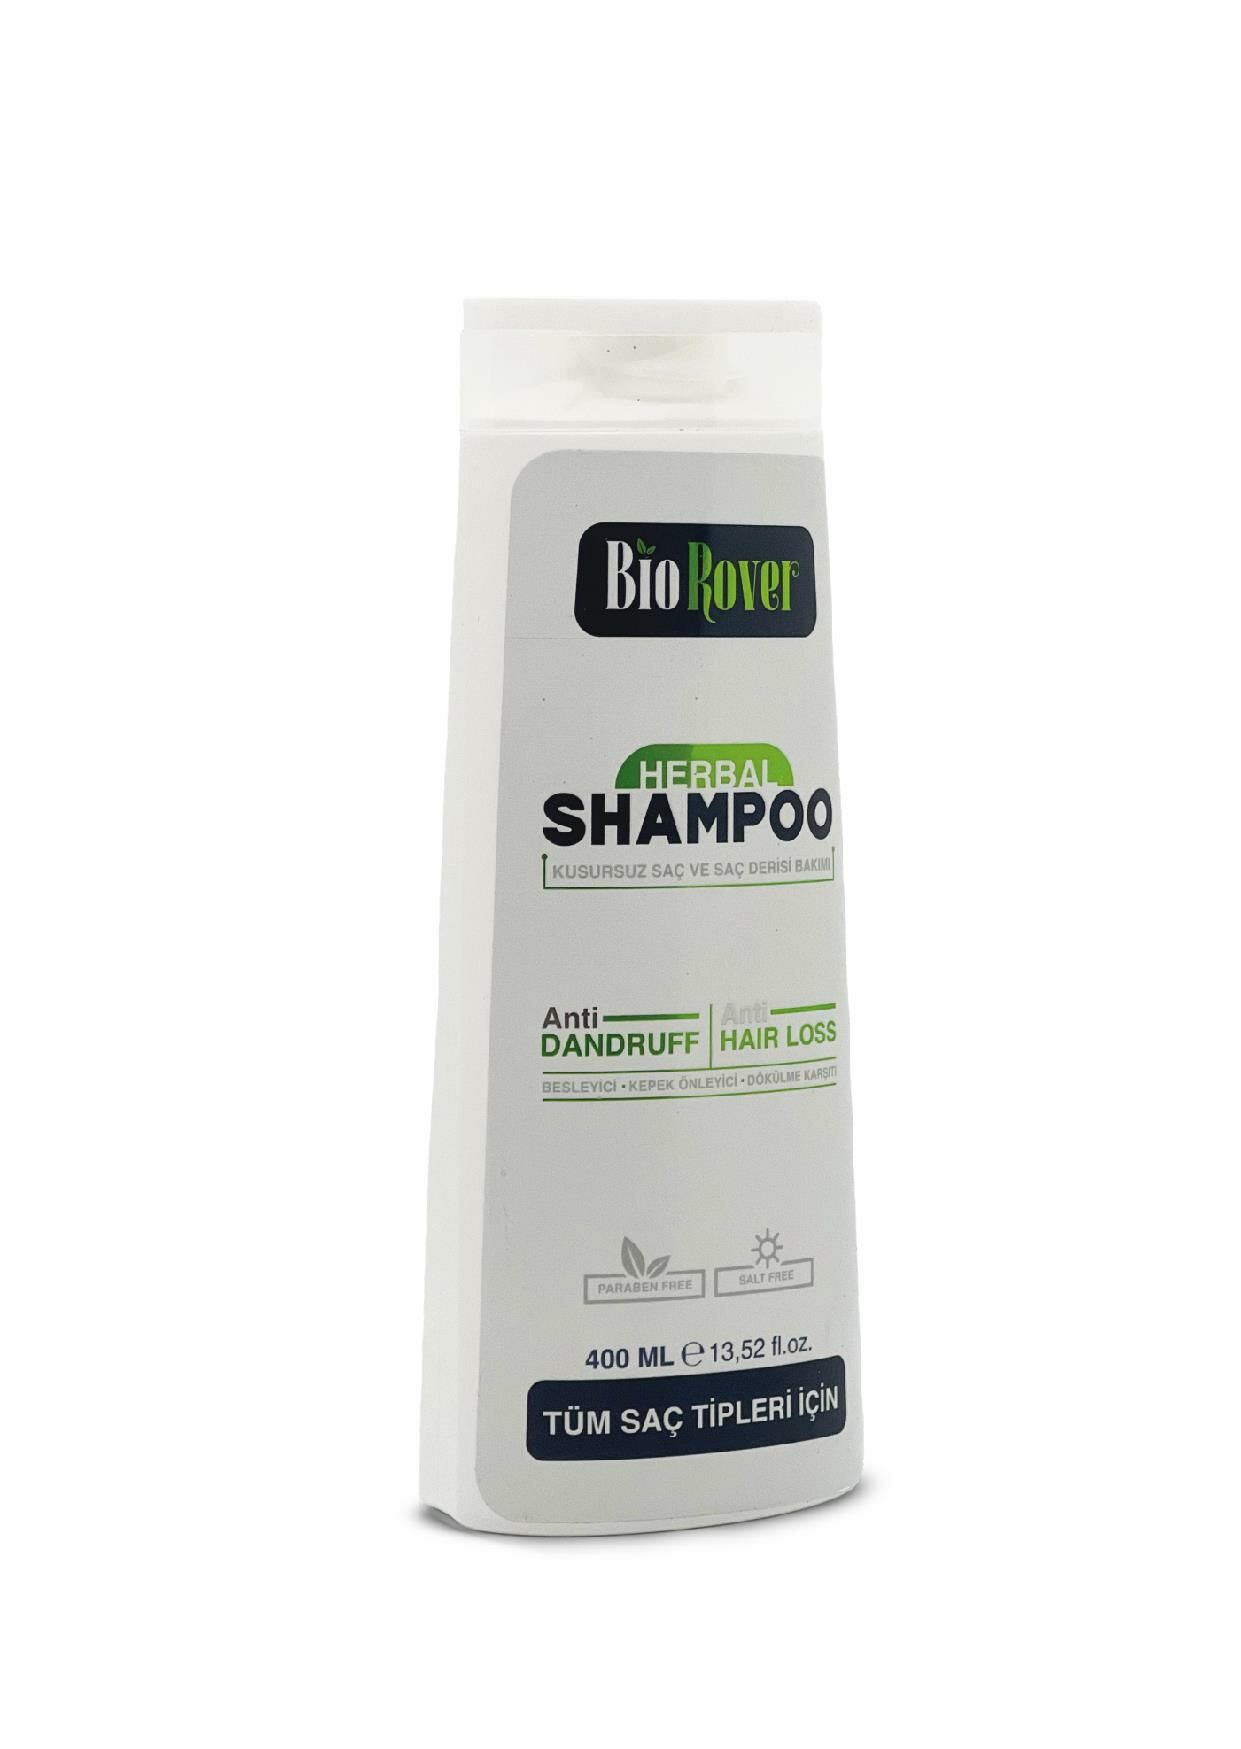 BioRover Herbal Shampoo 400 ml